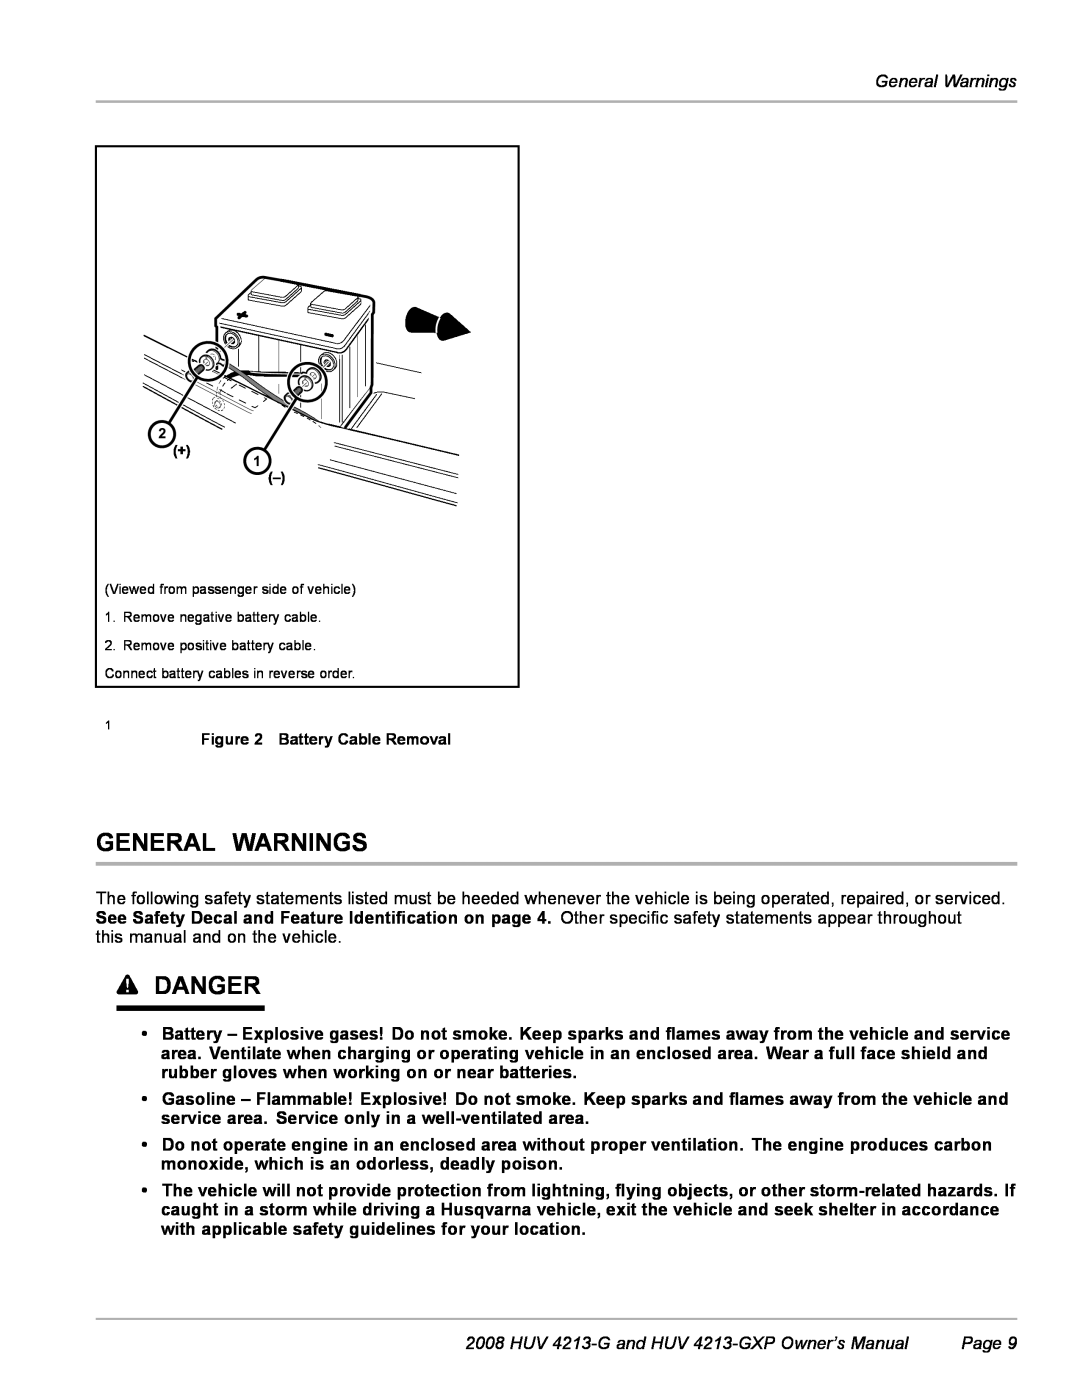 Husqvarna HUV 4213-GXP owner manual General Warnings, Danger, Page 